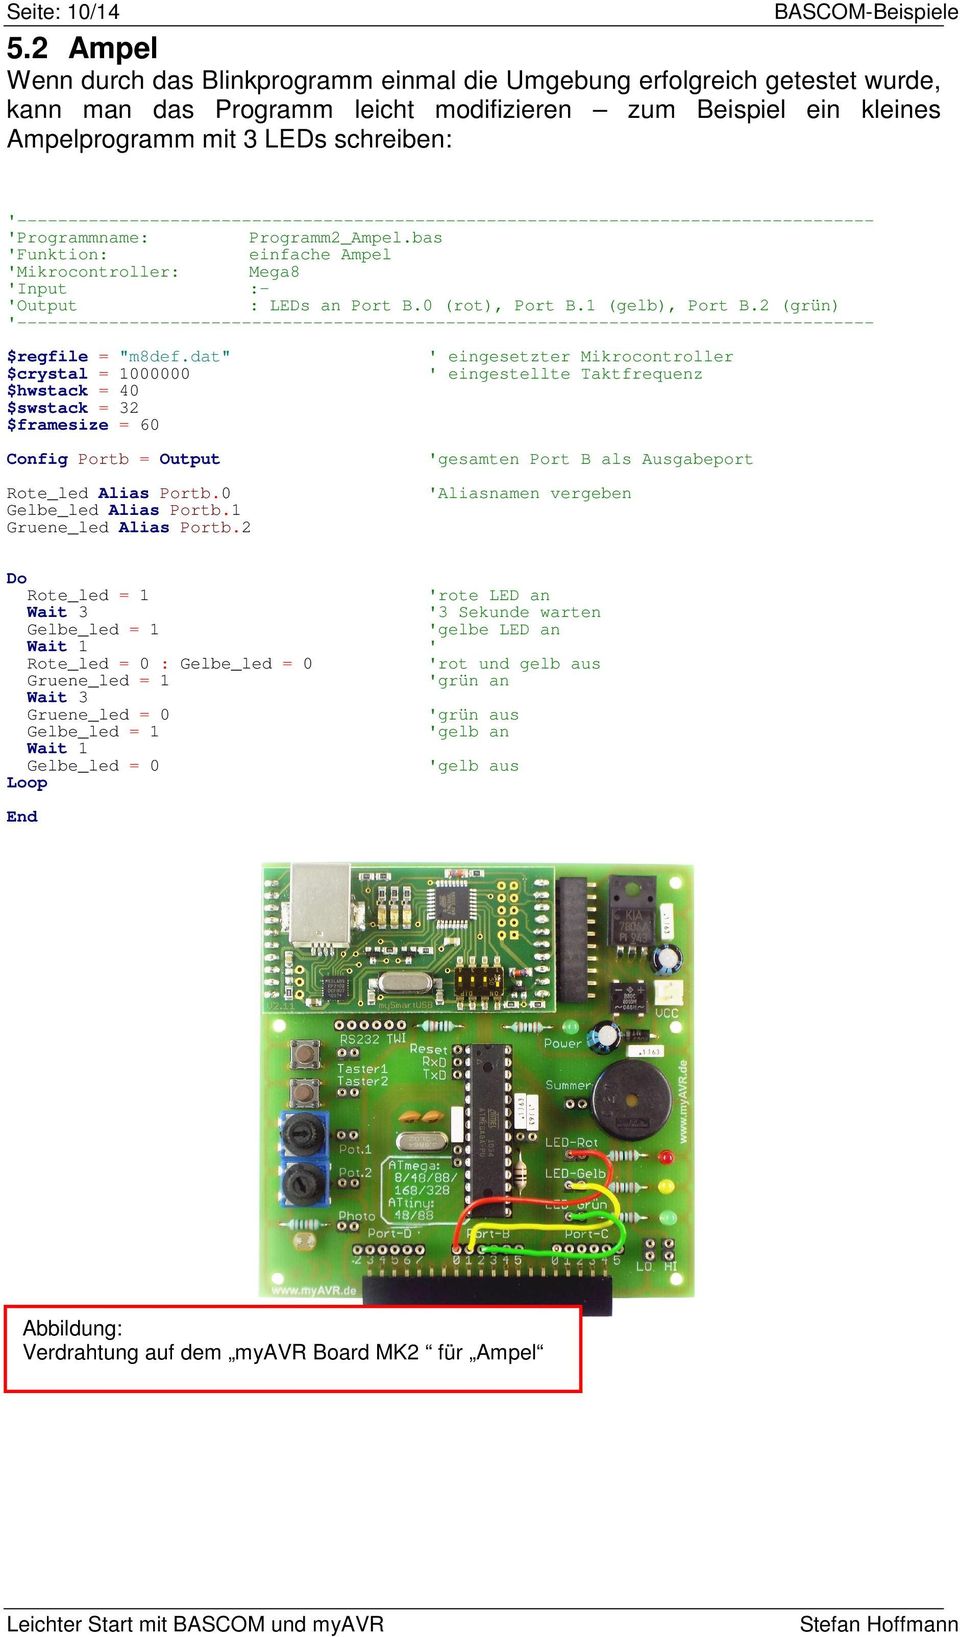 'Programmname: Programm2_Ampel.bas 'Funktion: einfache Ampel 'Mikrocontroller: Mega8 'Input :- 'Output : LEDs an Port B.0 (rot), Port B.1 (gelb), Port B.2 (grün) $regfile = "m8def.